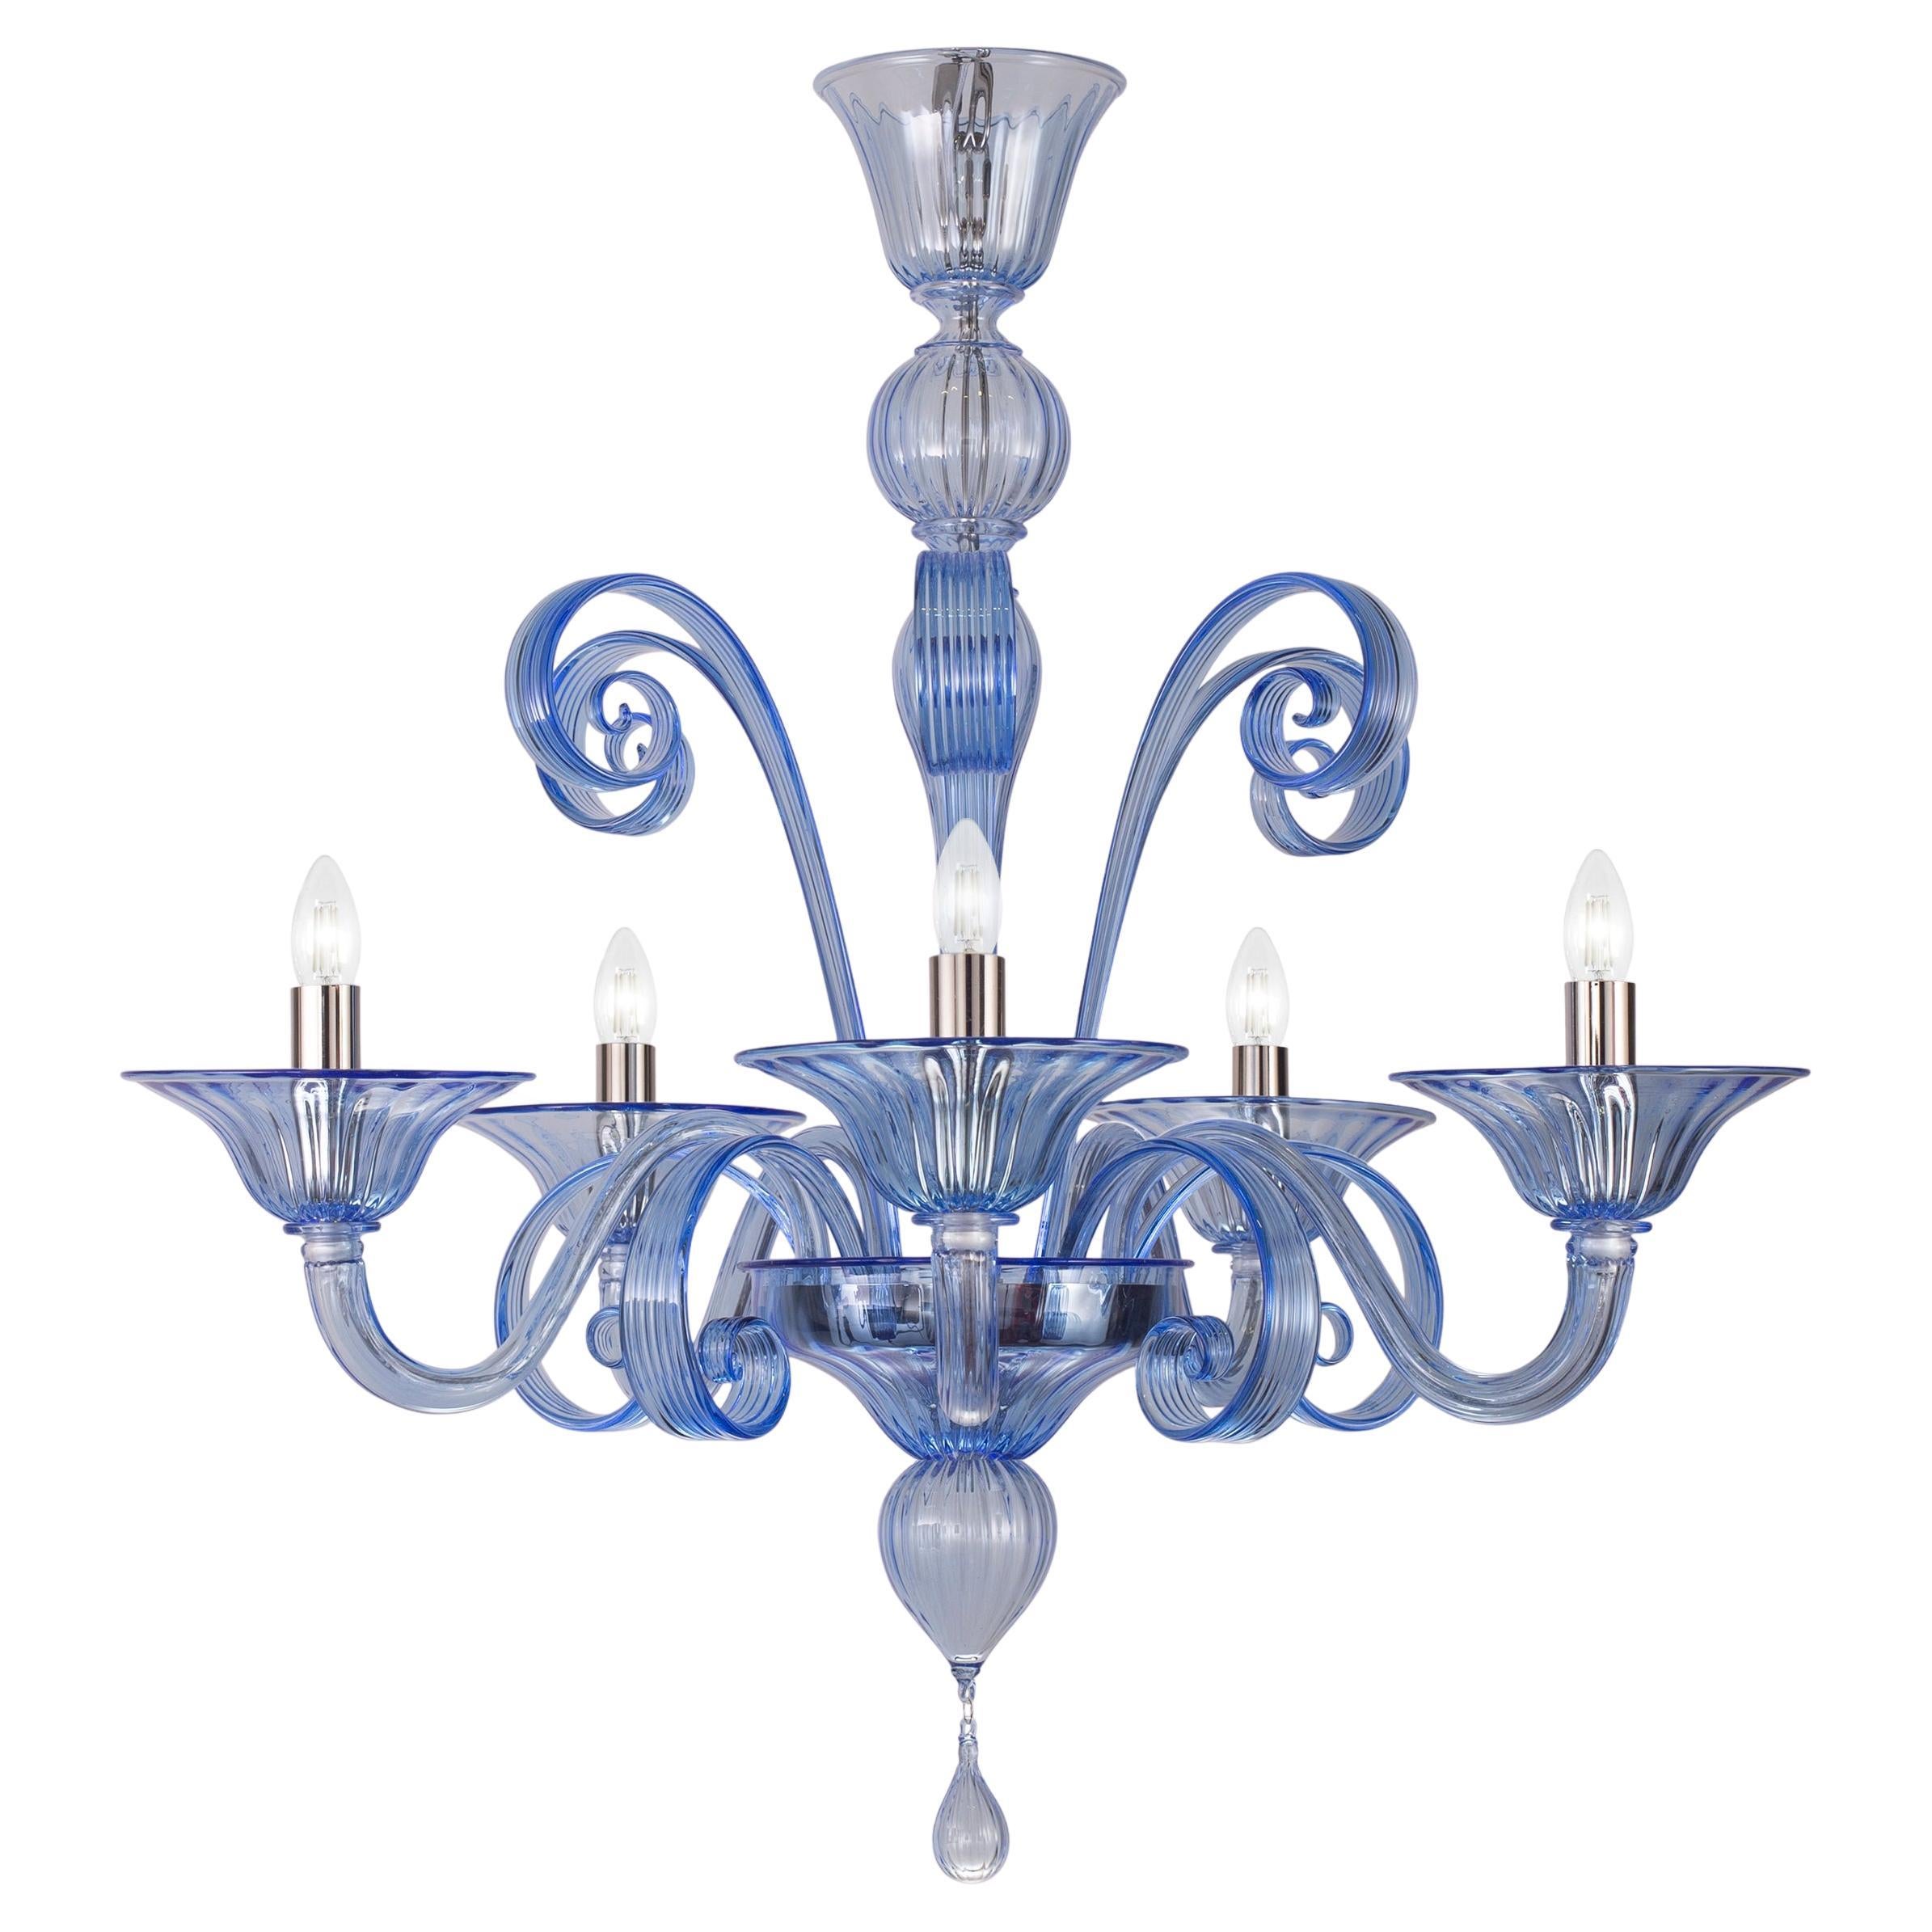 Capriccio Kronleuchter 5 Arme Blau Artistic Murano Glas von Multiforme im Angebot